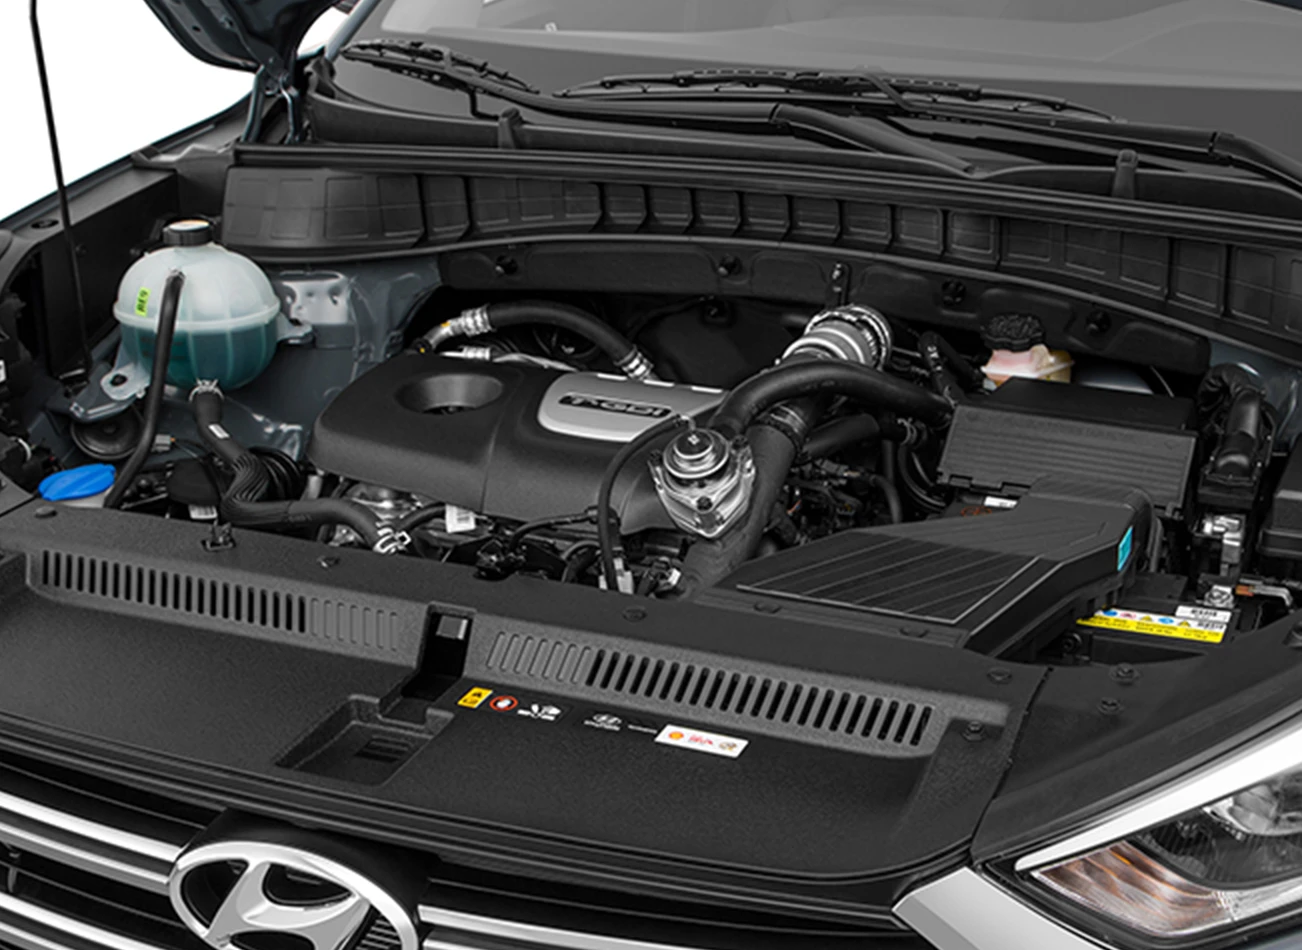 2017 Hyundai Tucson Review: Engine | CarMax